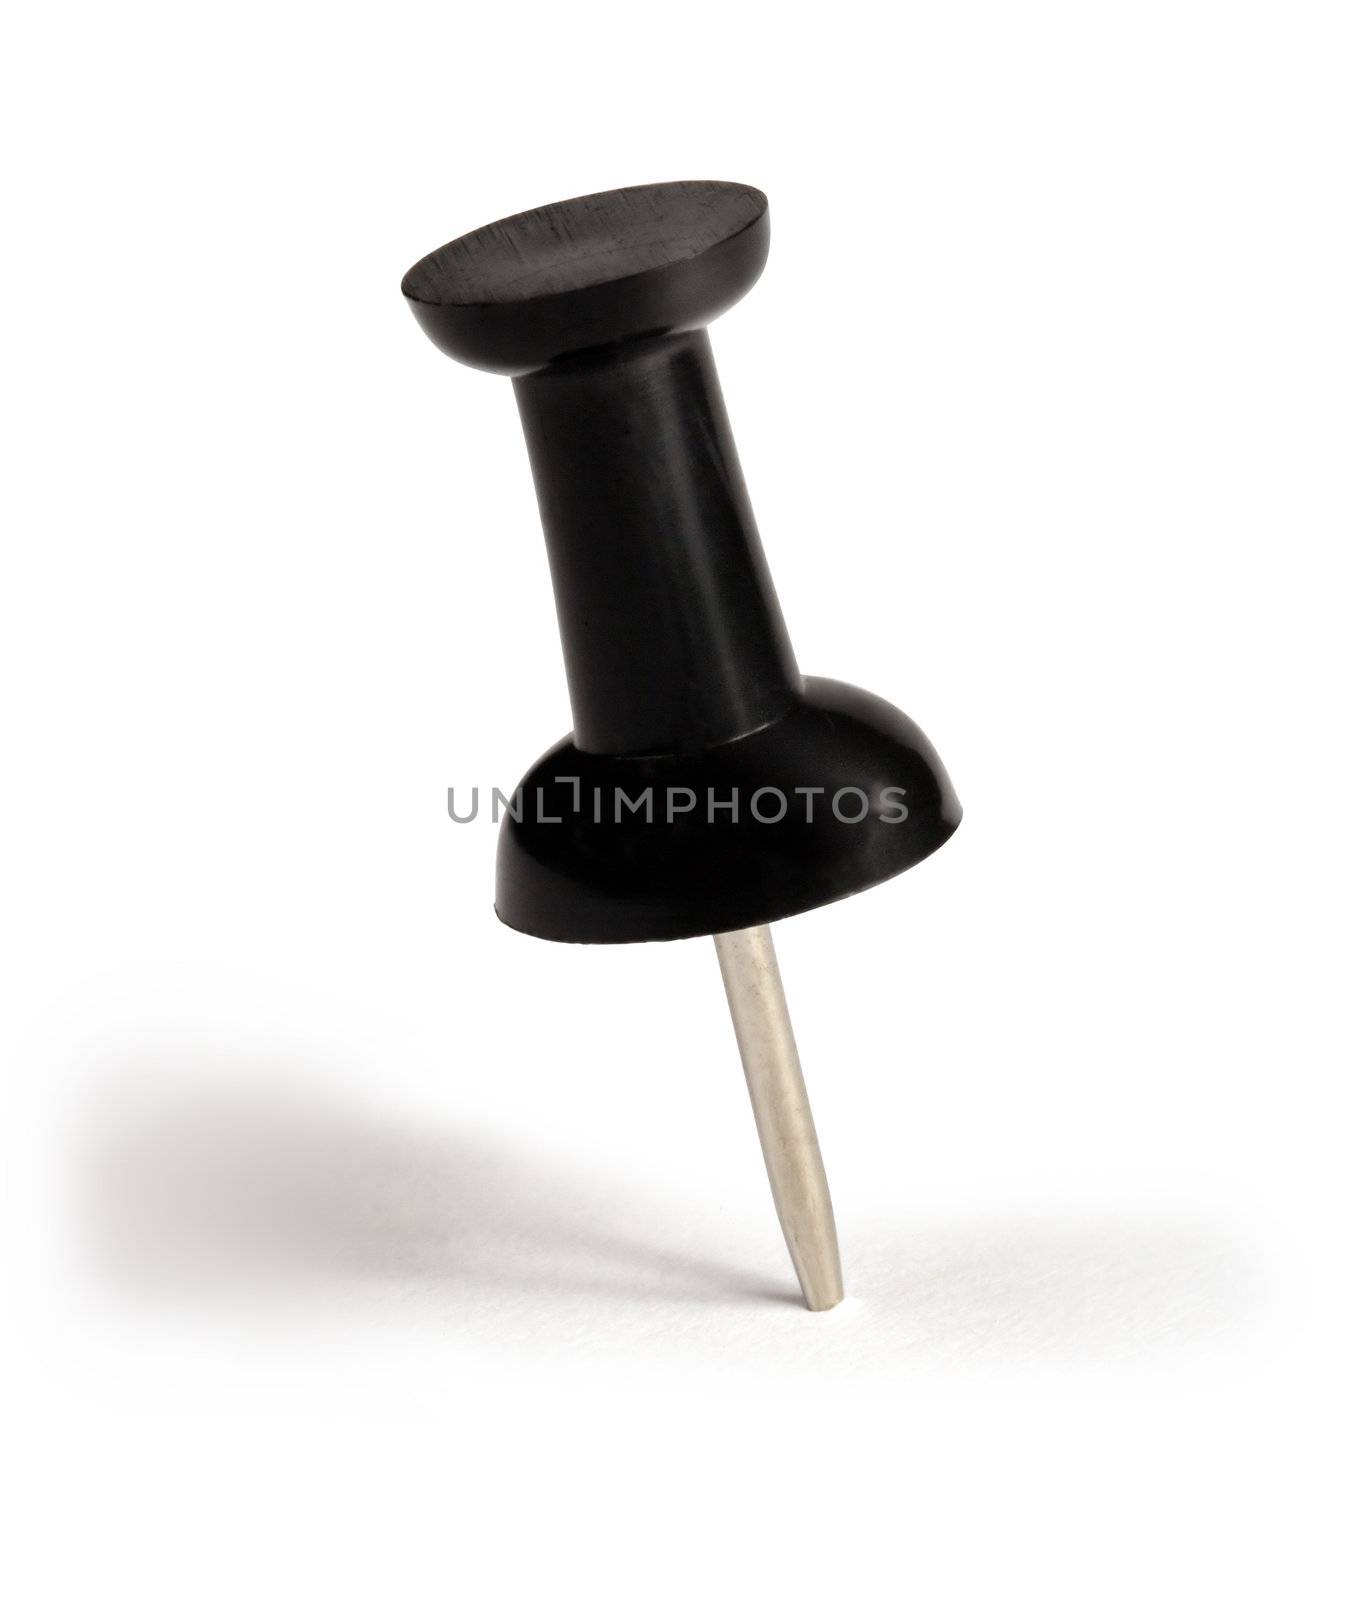 Macro image of a single black push-pin.
